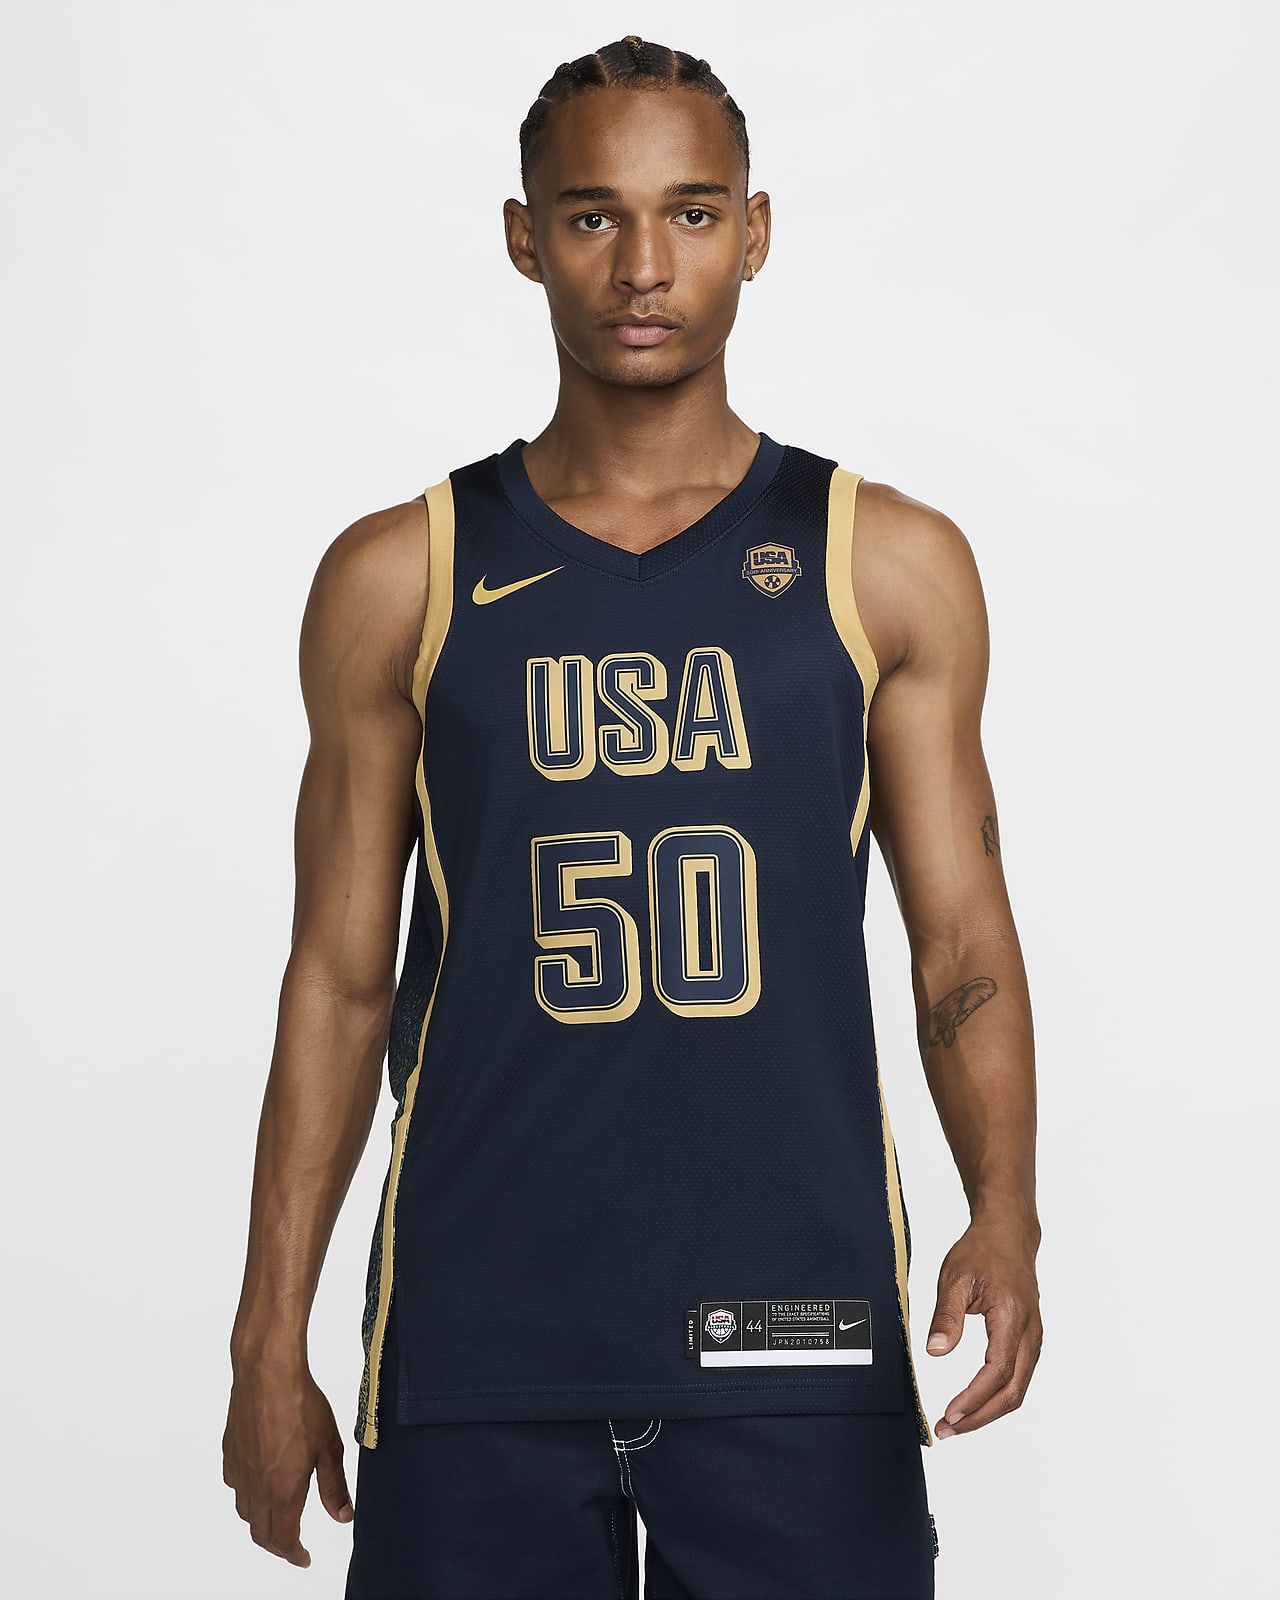 USAB Limited Nike replica basketbaljersey voor heren